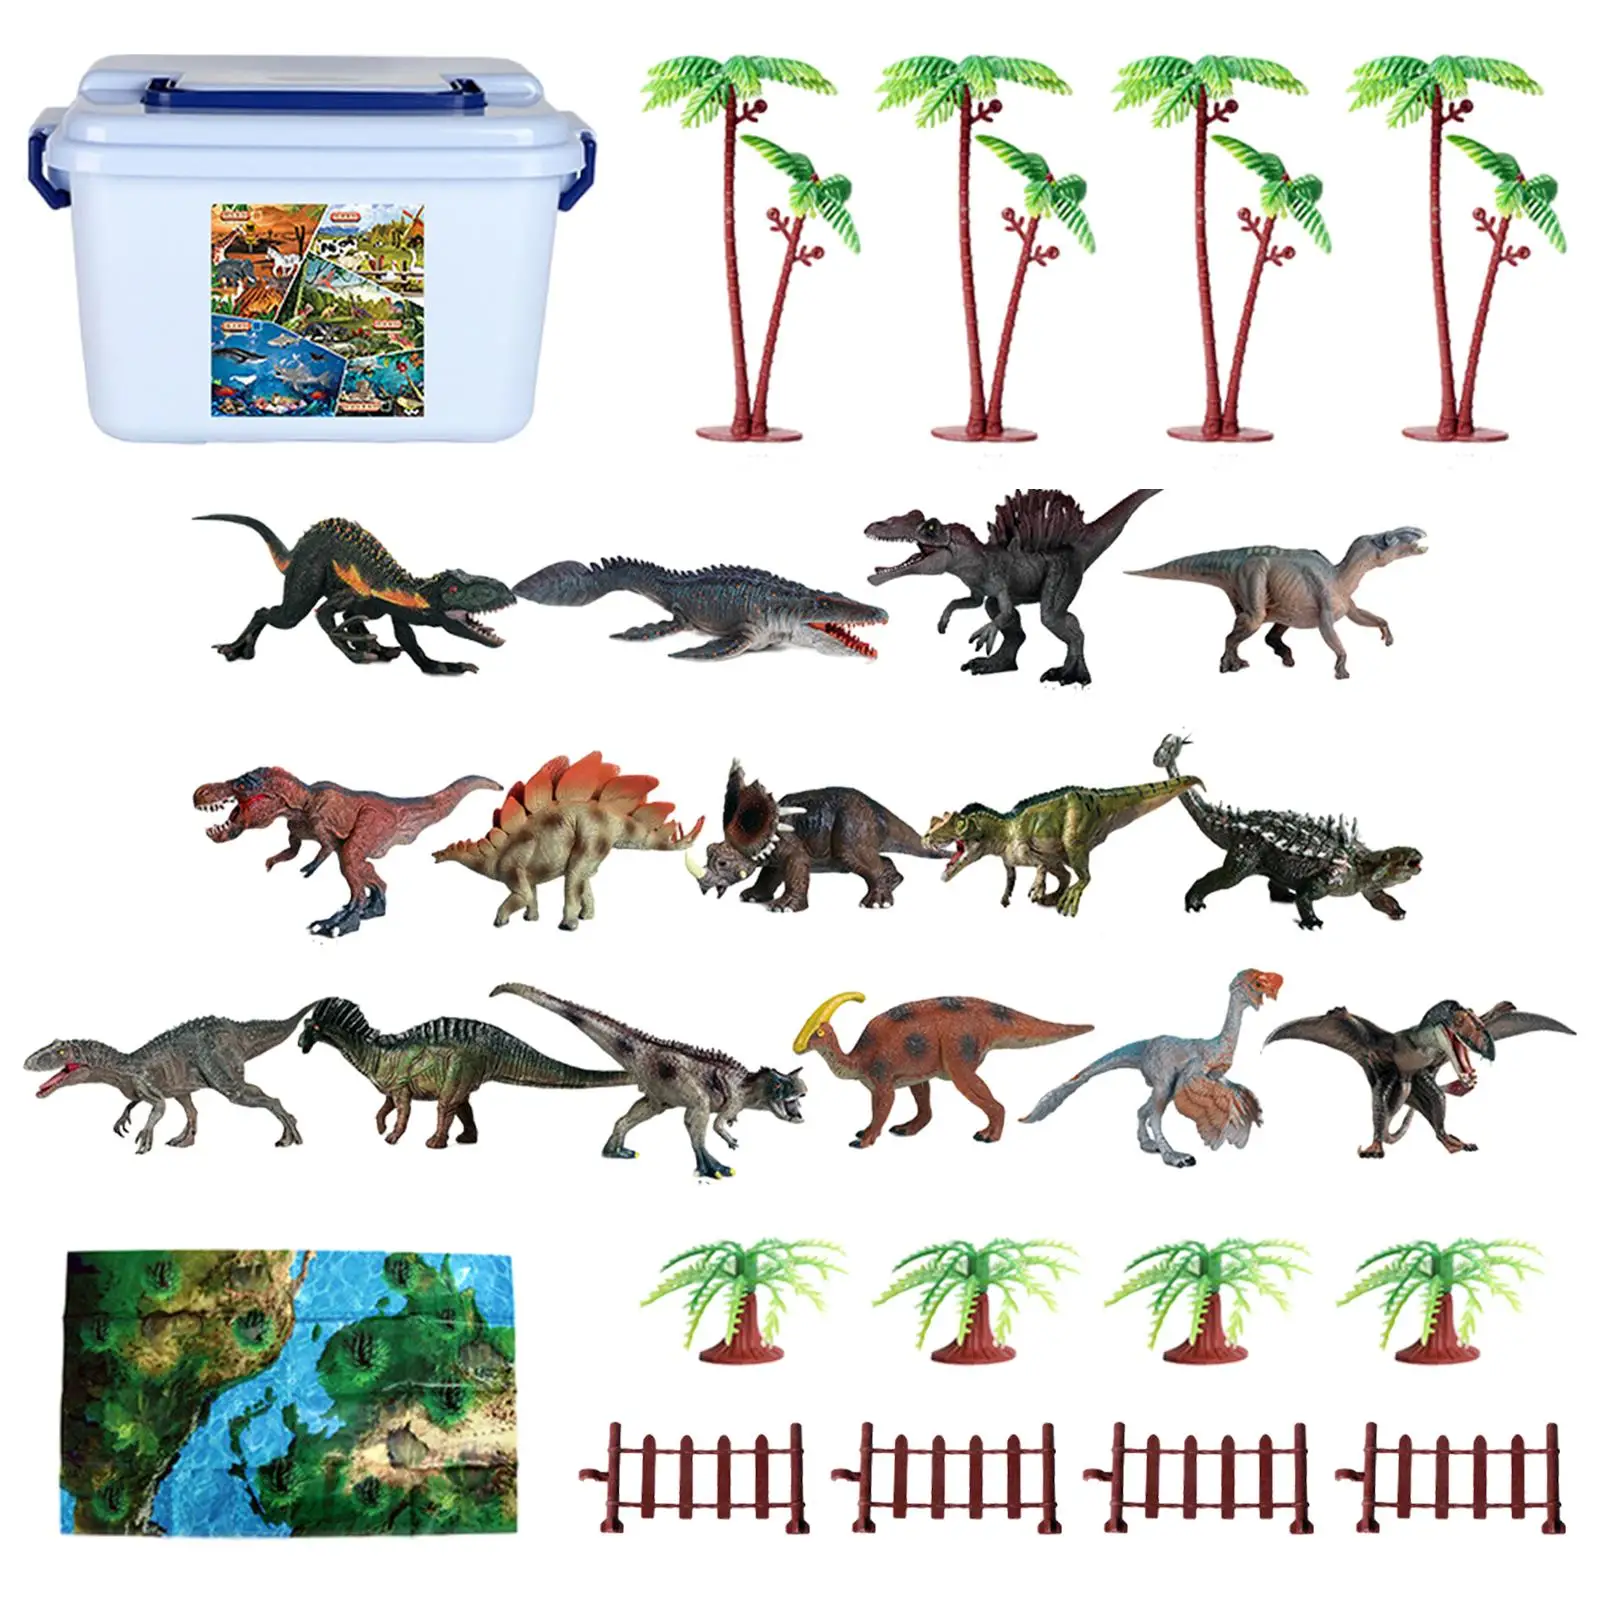 15 Pieces Dinosaur Toys Dinosaur Figures Playset for Festivals New Year